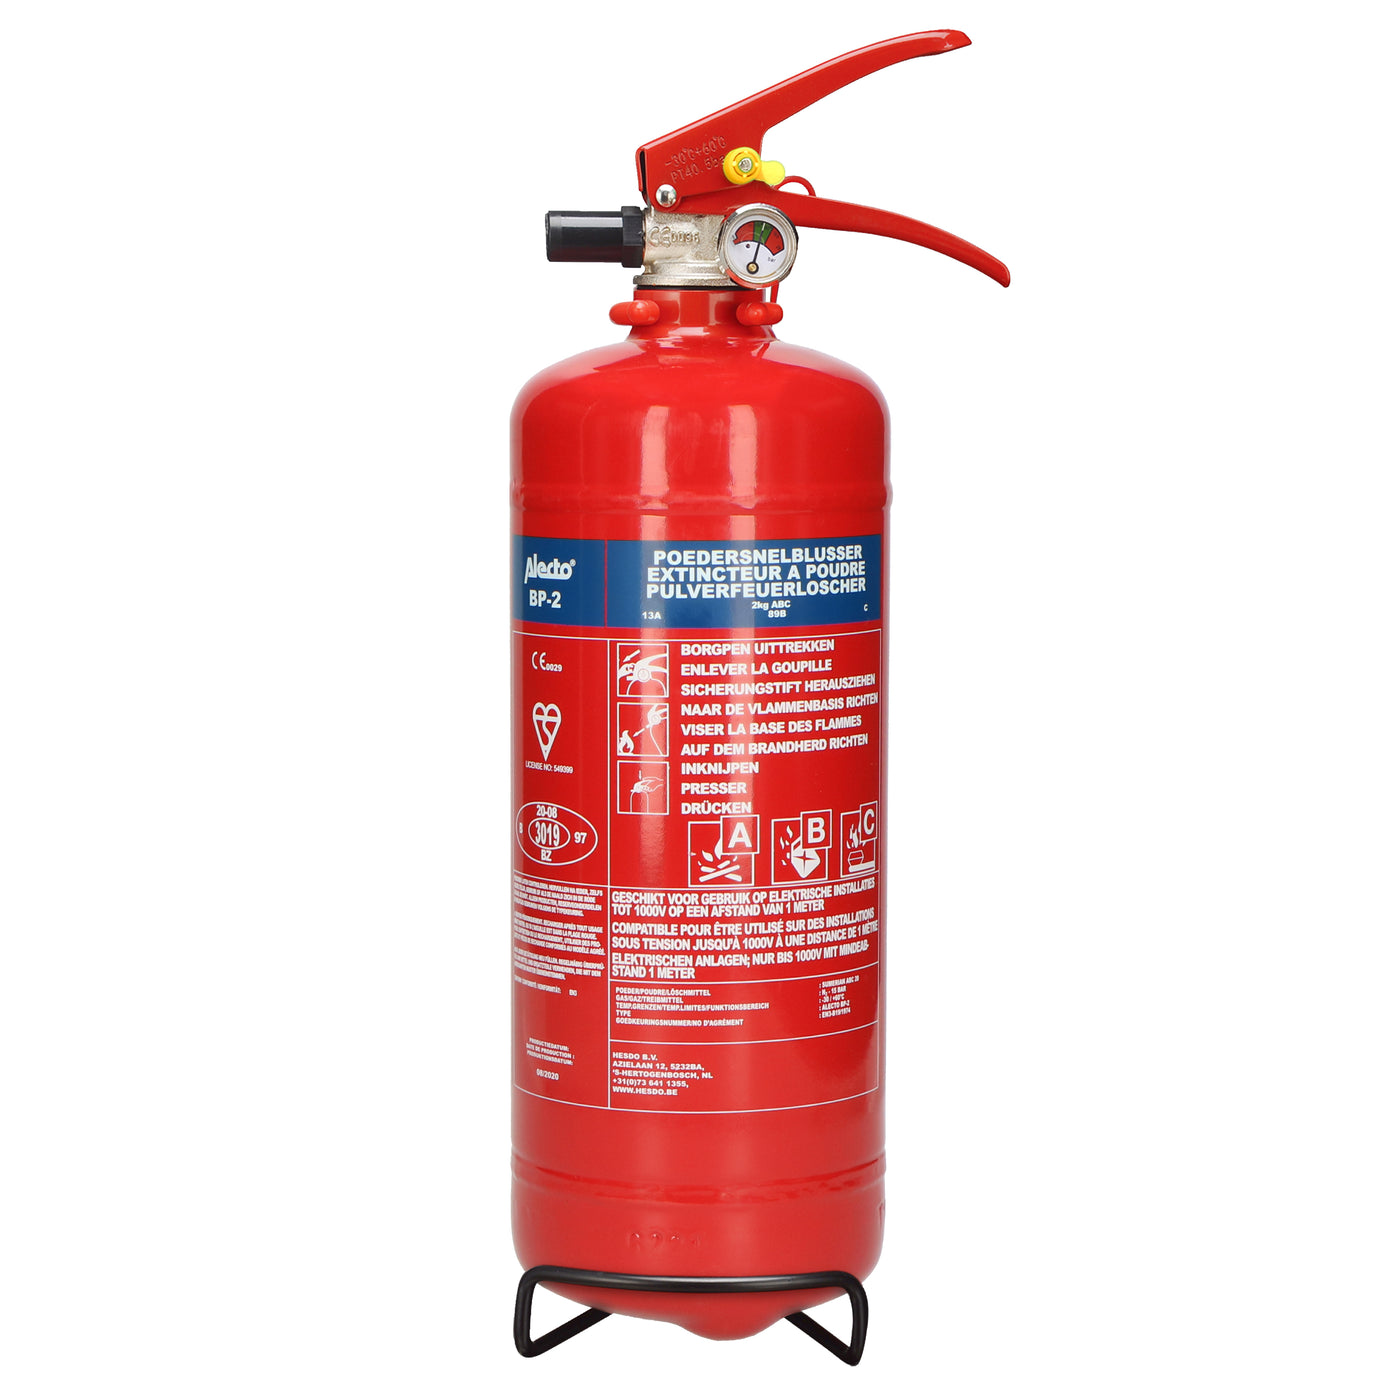 Alecto BP-2 - Fire extinguisher powder 2 kilogram